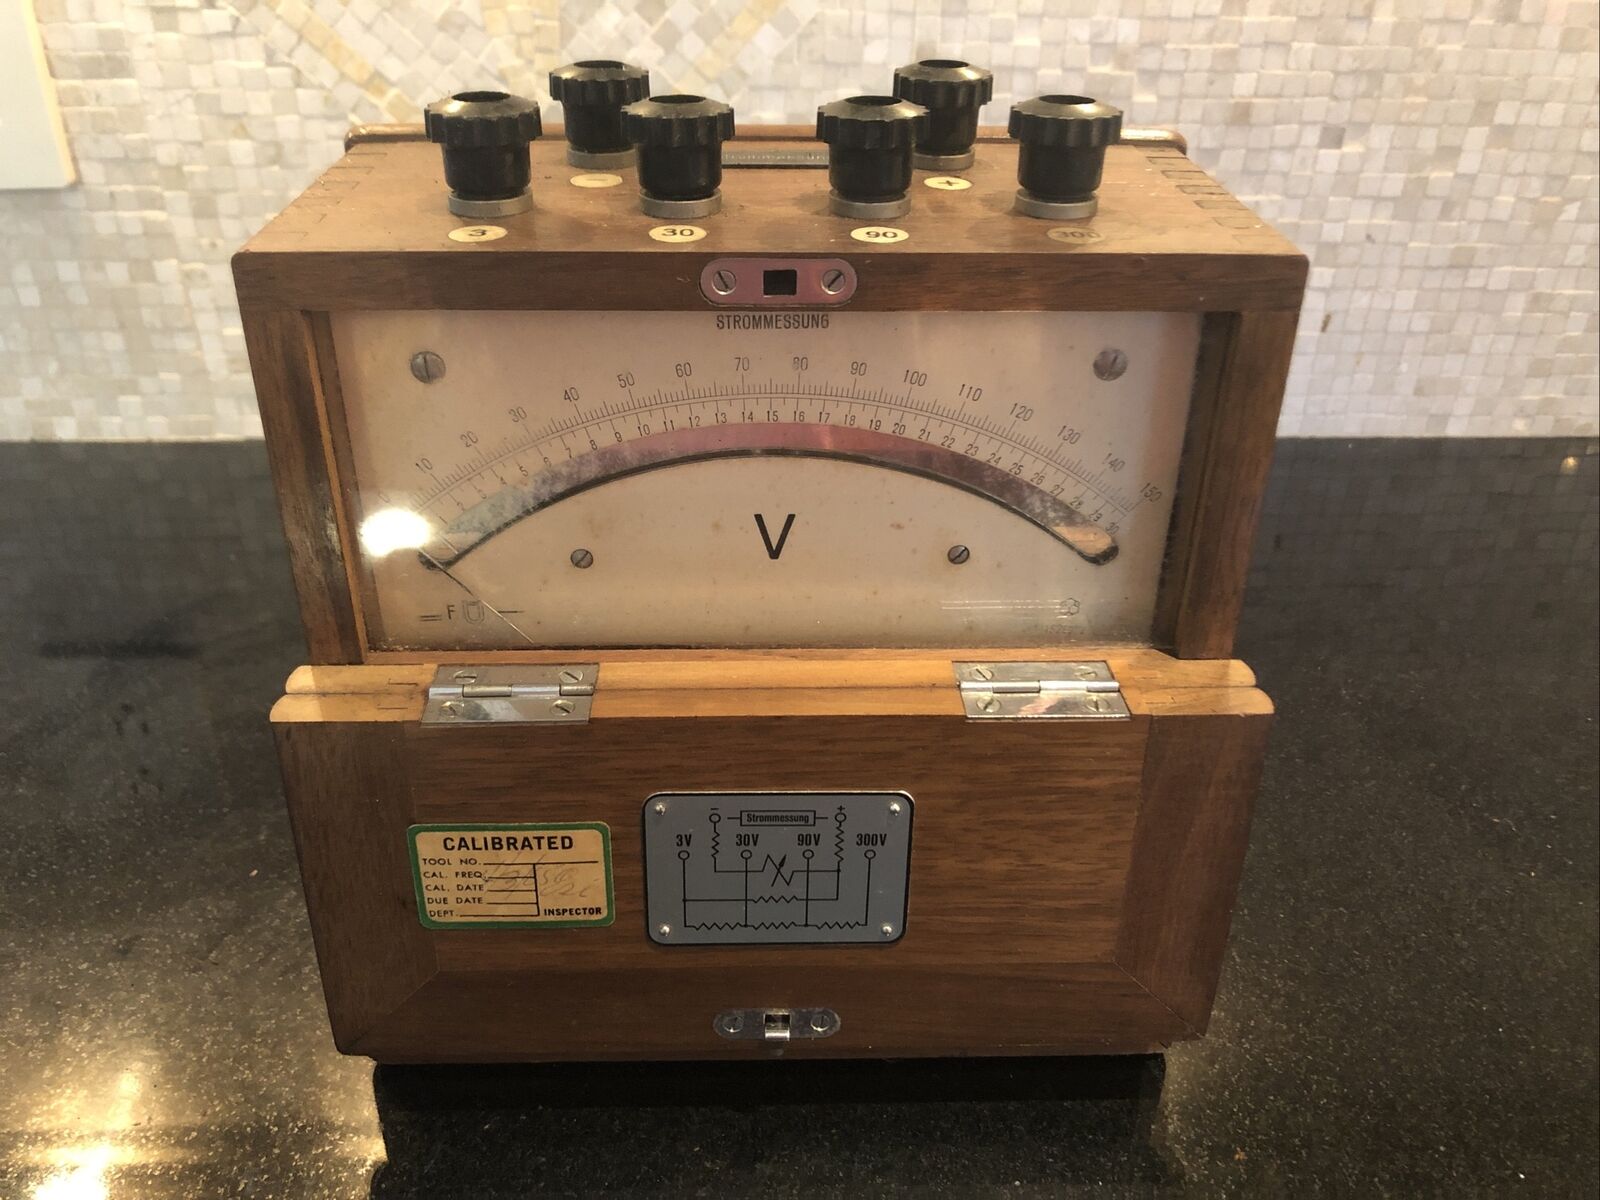 Antique Strommessung Volt Meter Ammeter Test Meter Made in Germany